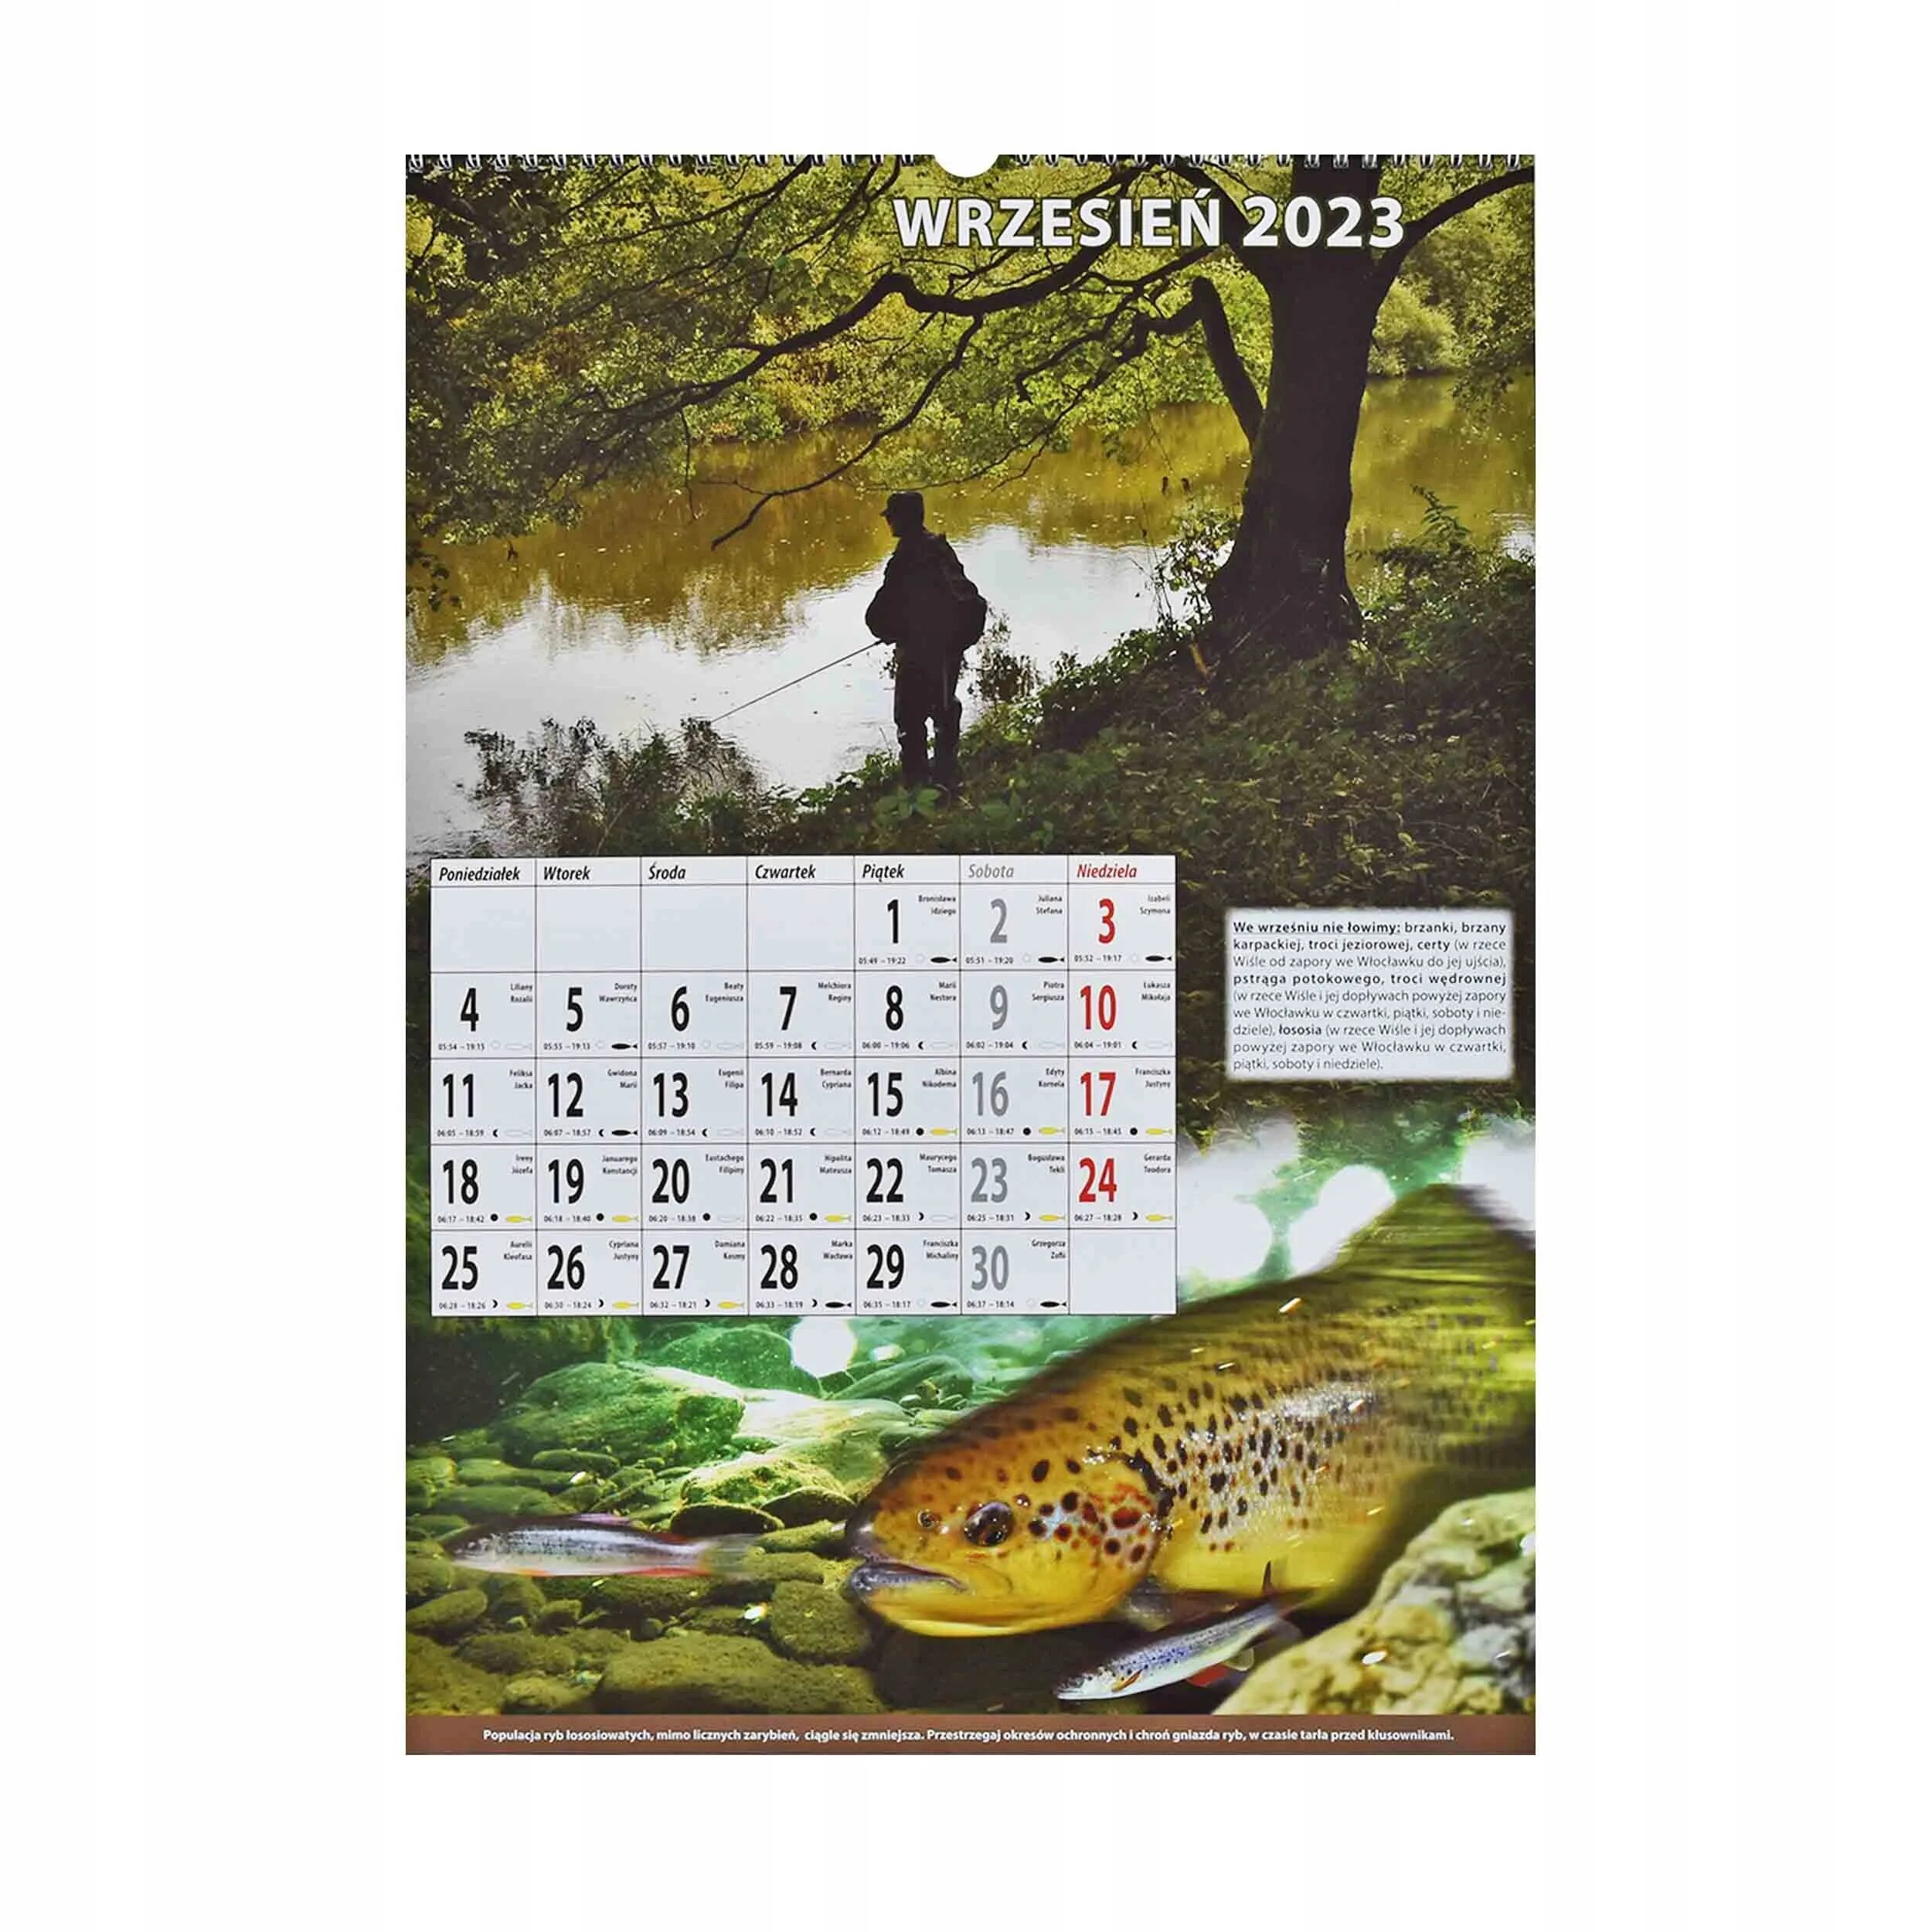 Календарь рыболова на 2023 год